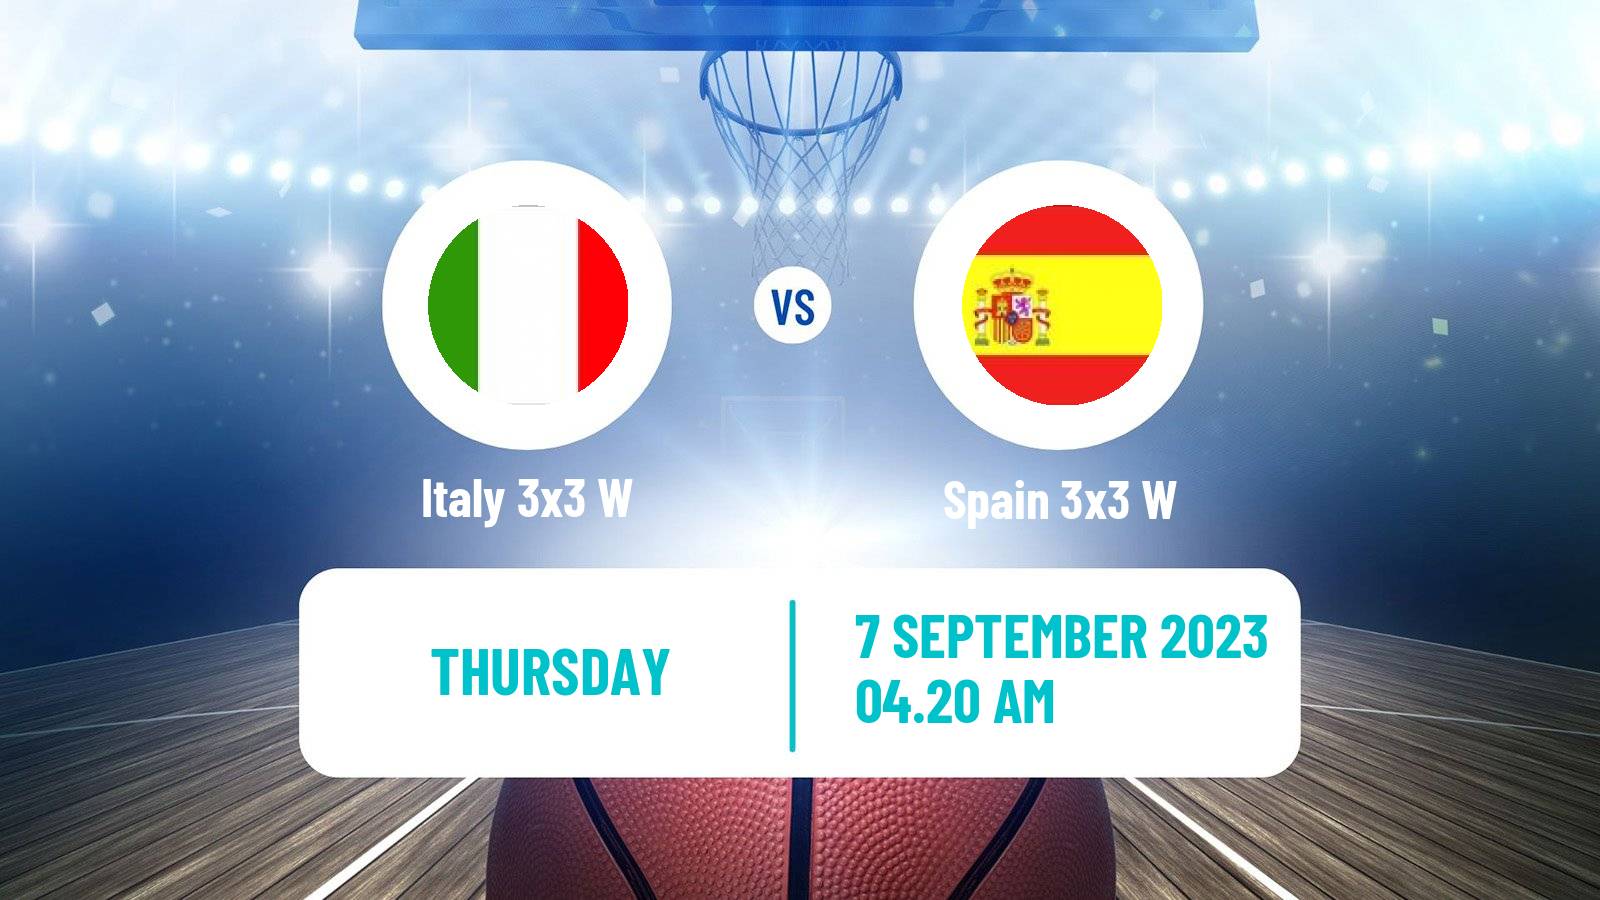 Basketball Europe Cup Basketball 3x3 Women Italy 3x3 W - Spain 3x3 W